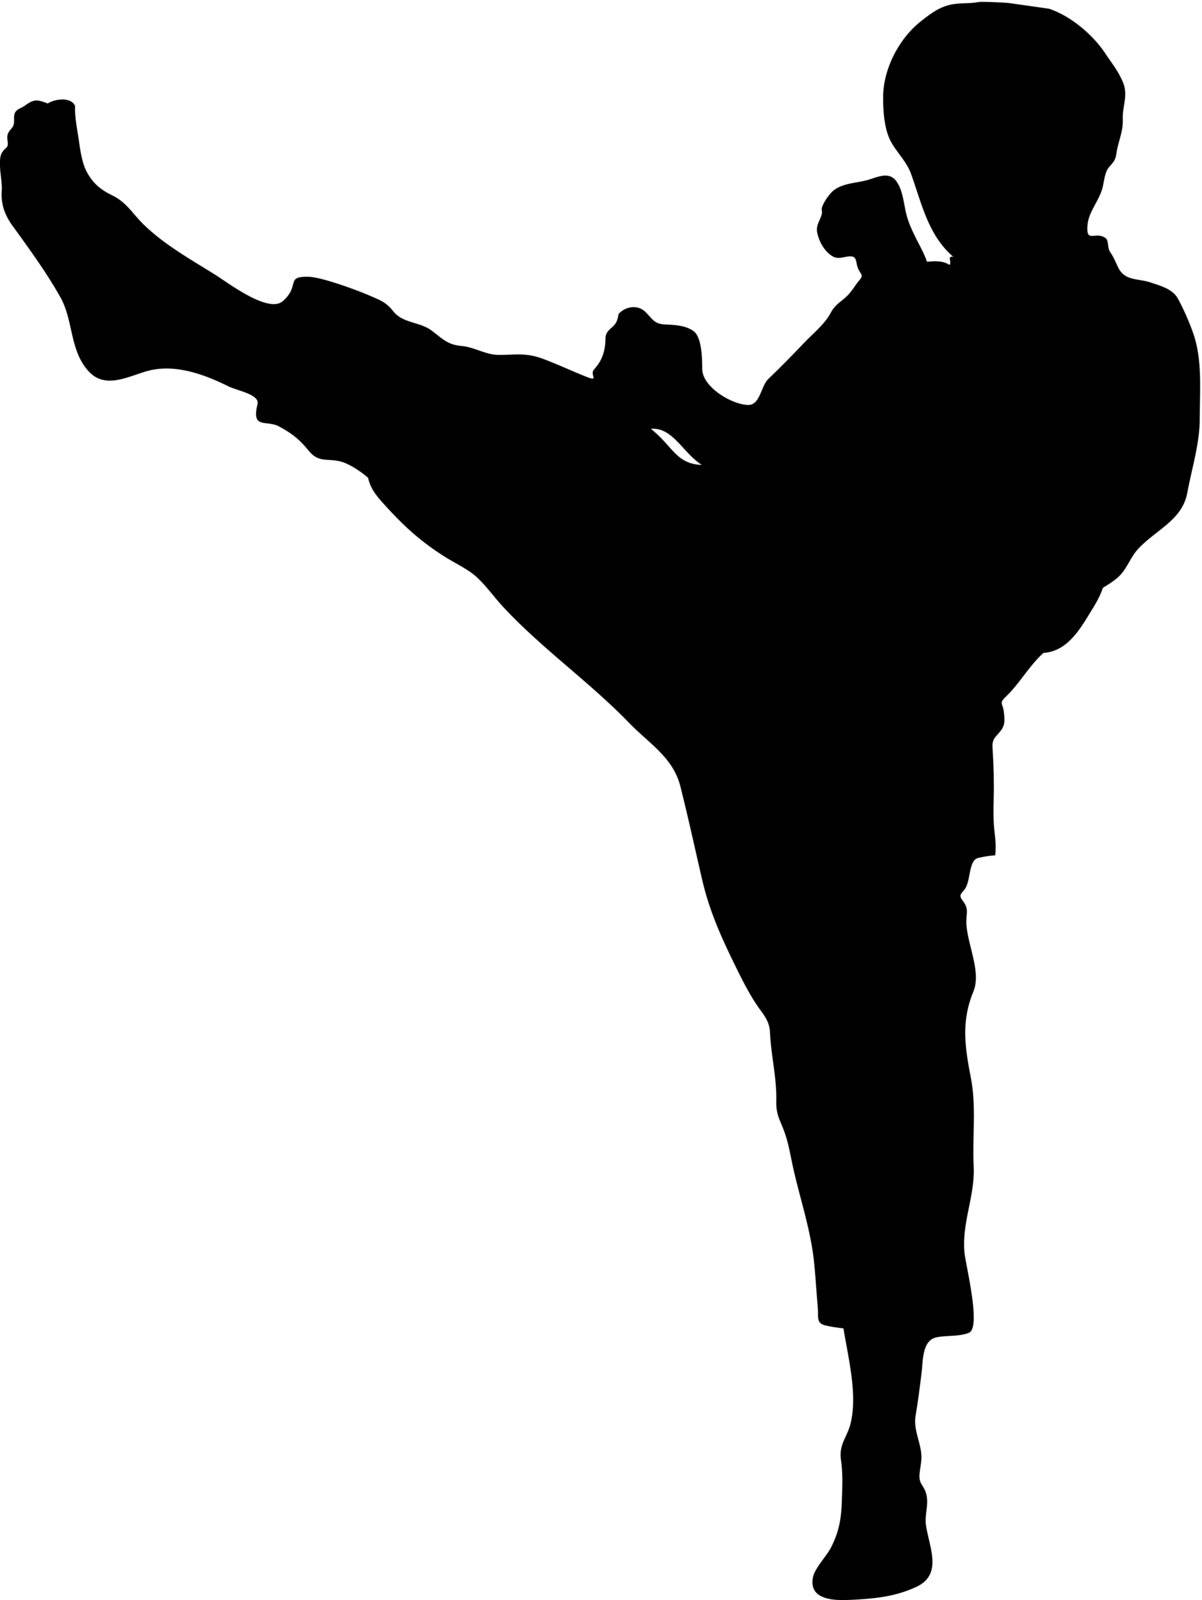 martial arts logo symbol. karate style. Japan, Korea, Okinawa. by SPLAV